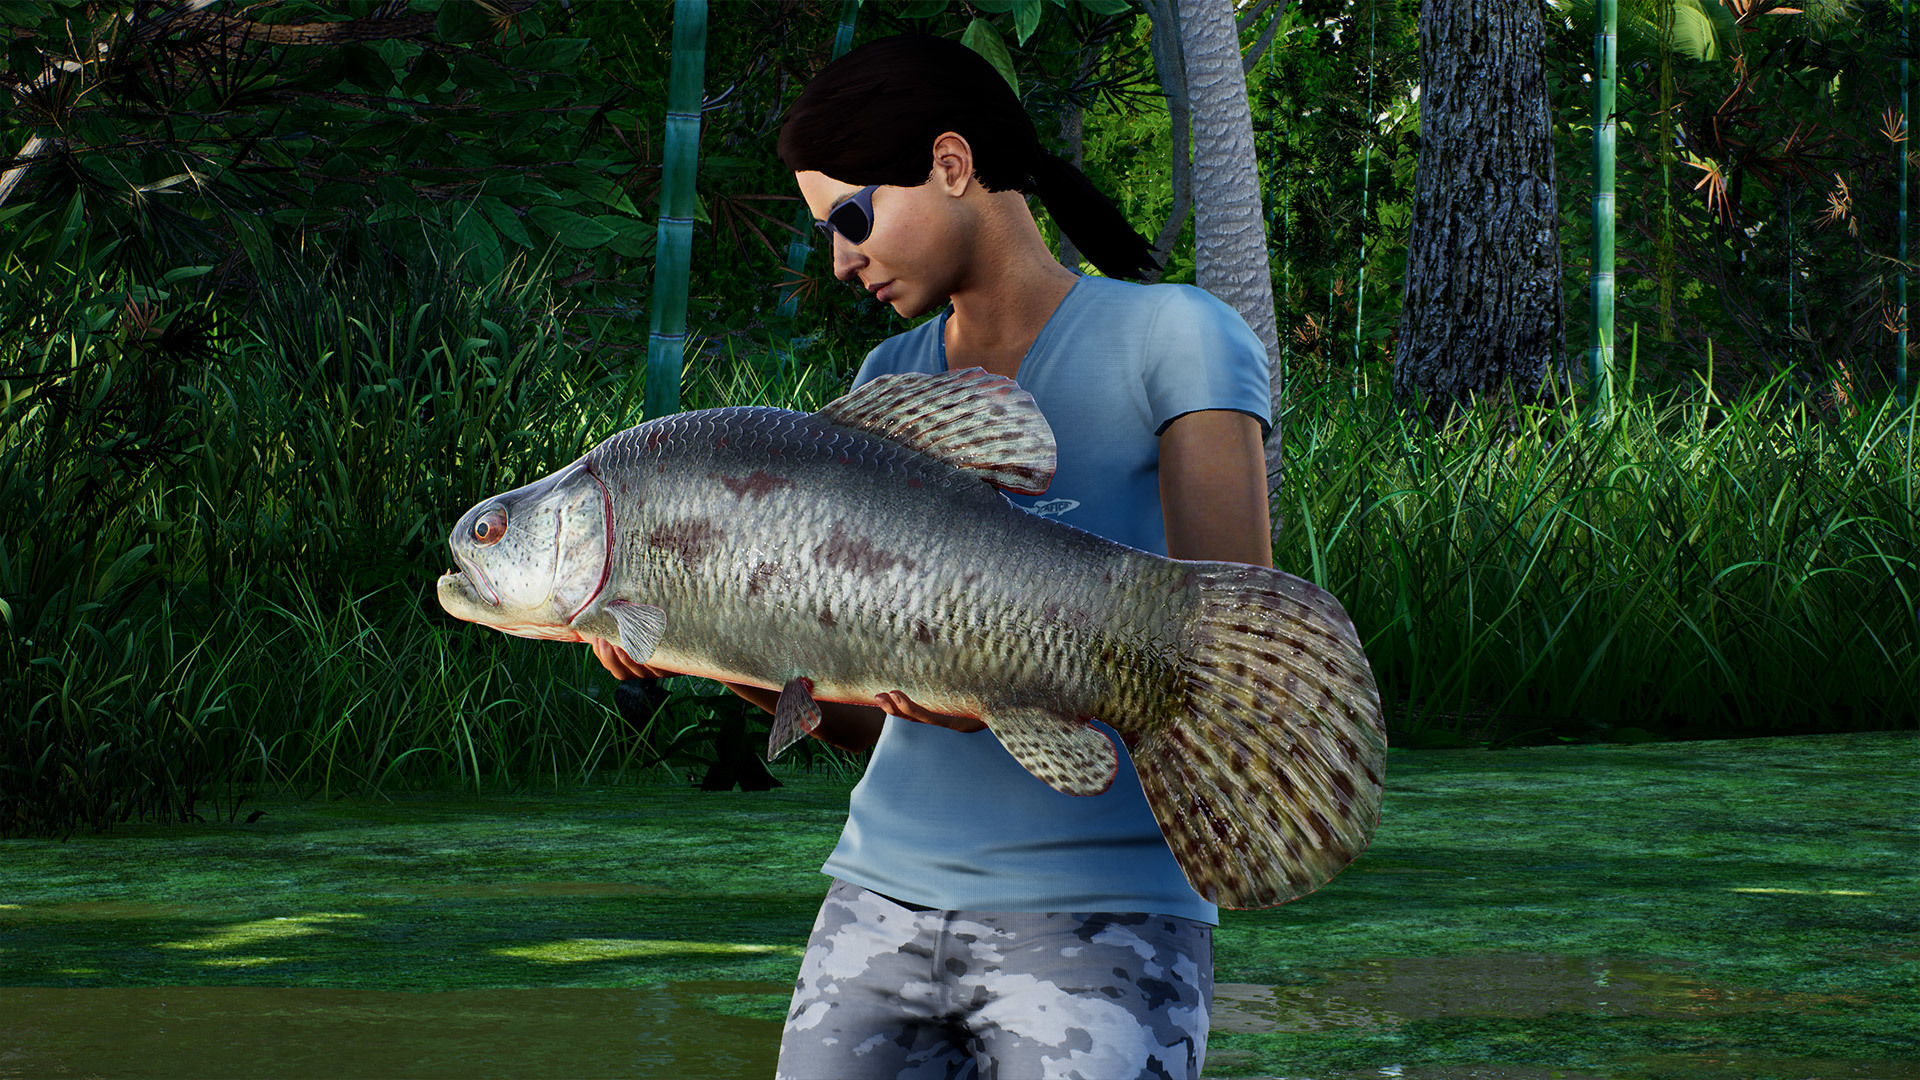 Fishing Sim World®: Pro Tour - Big Fish Lure Pack on Steam